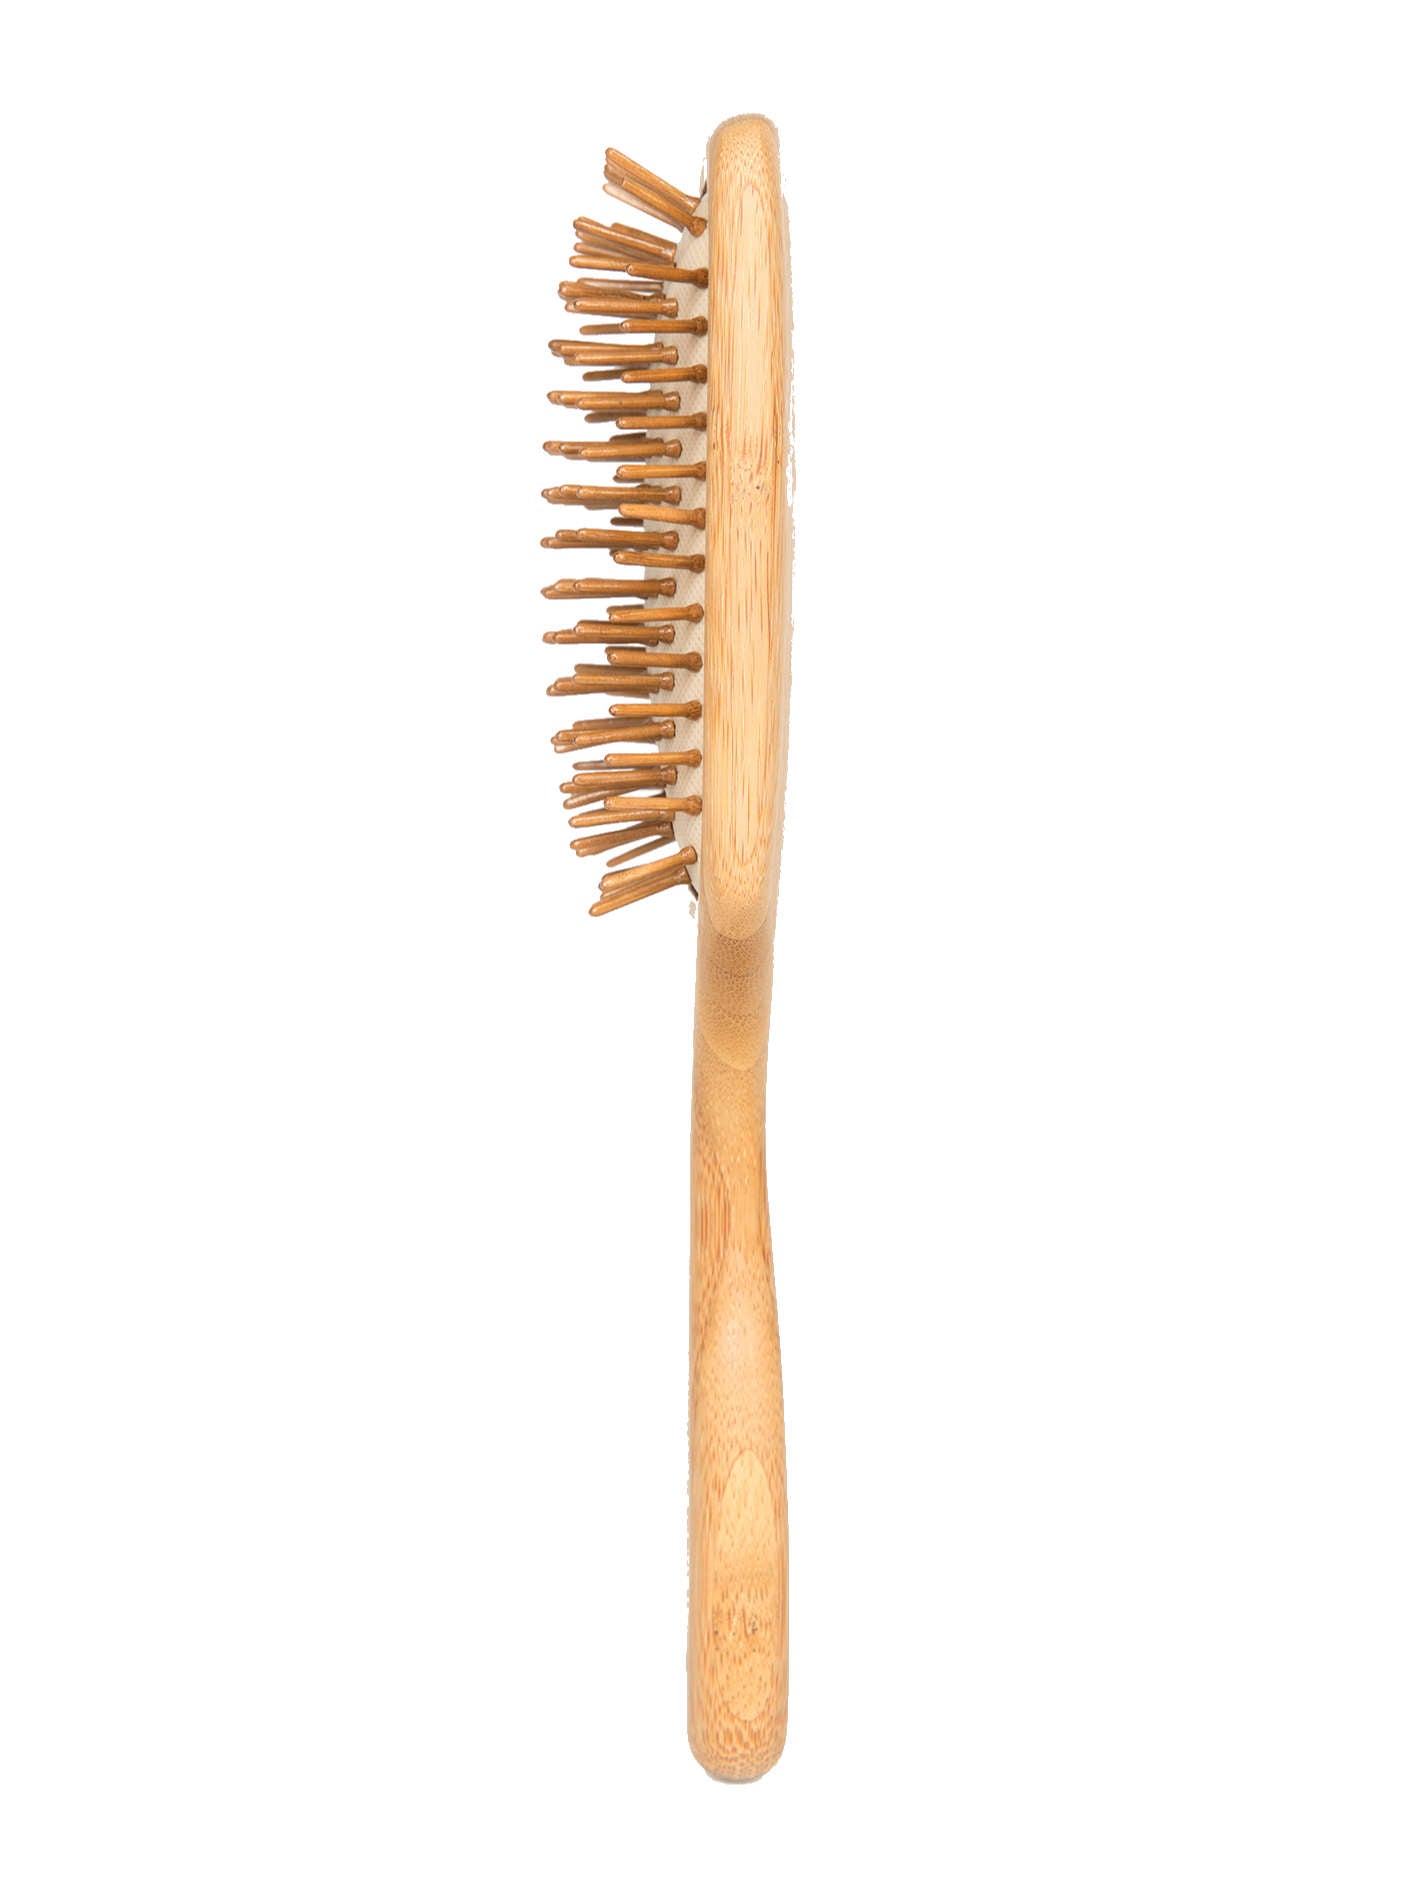 ZWS Essentials-Bamboo Hair Brush - EarthHero